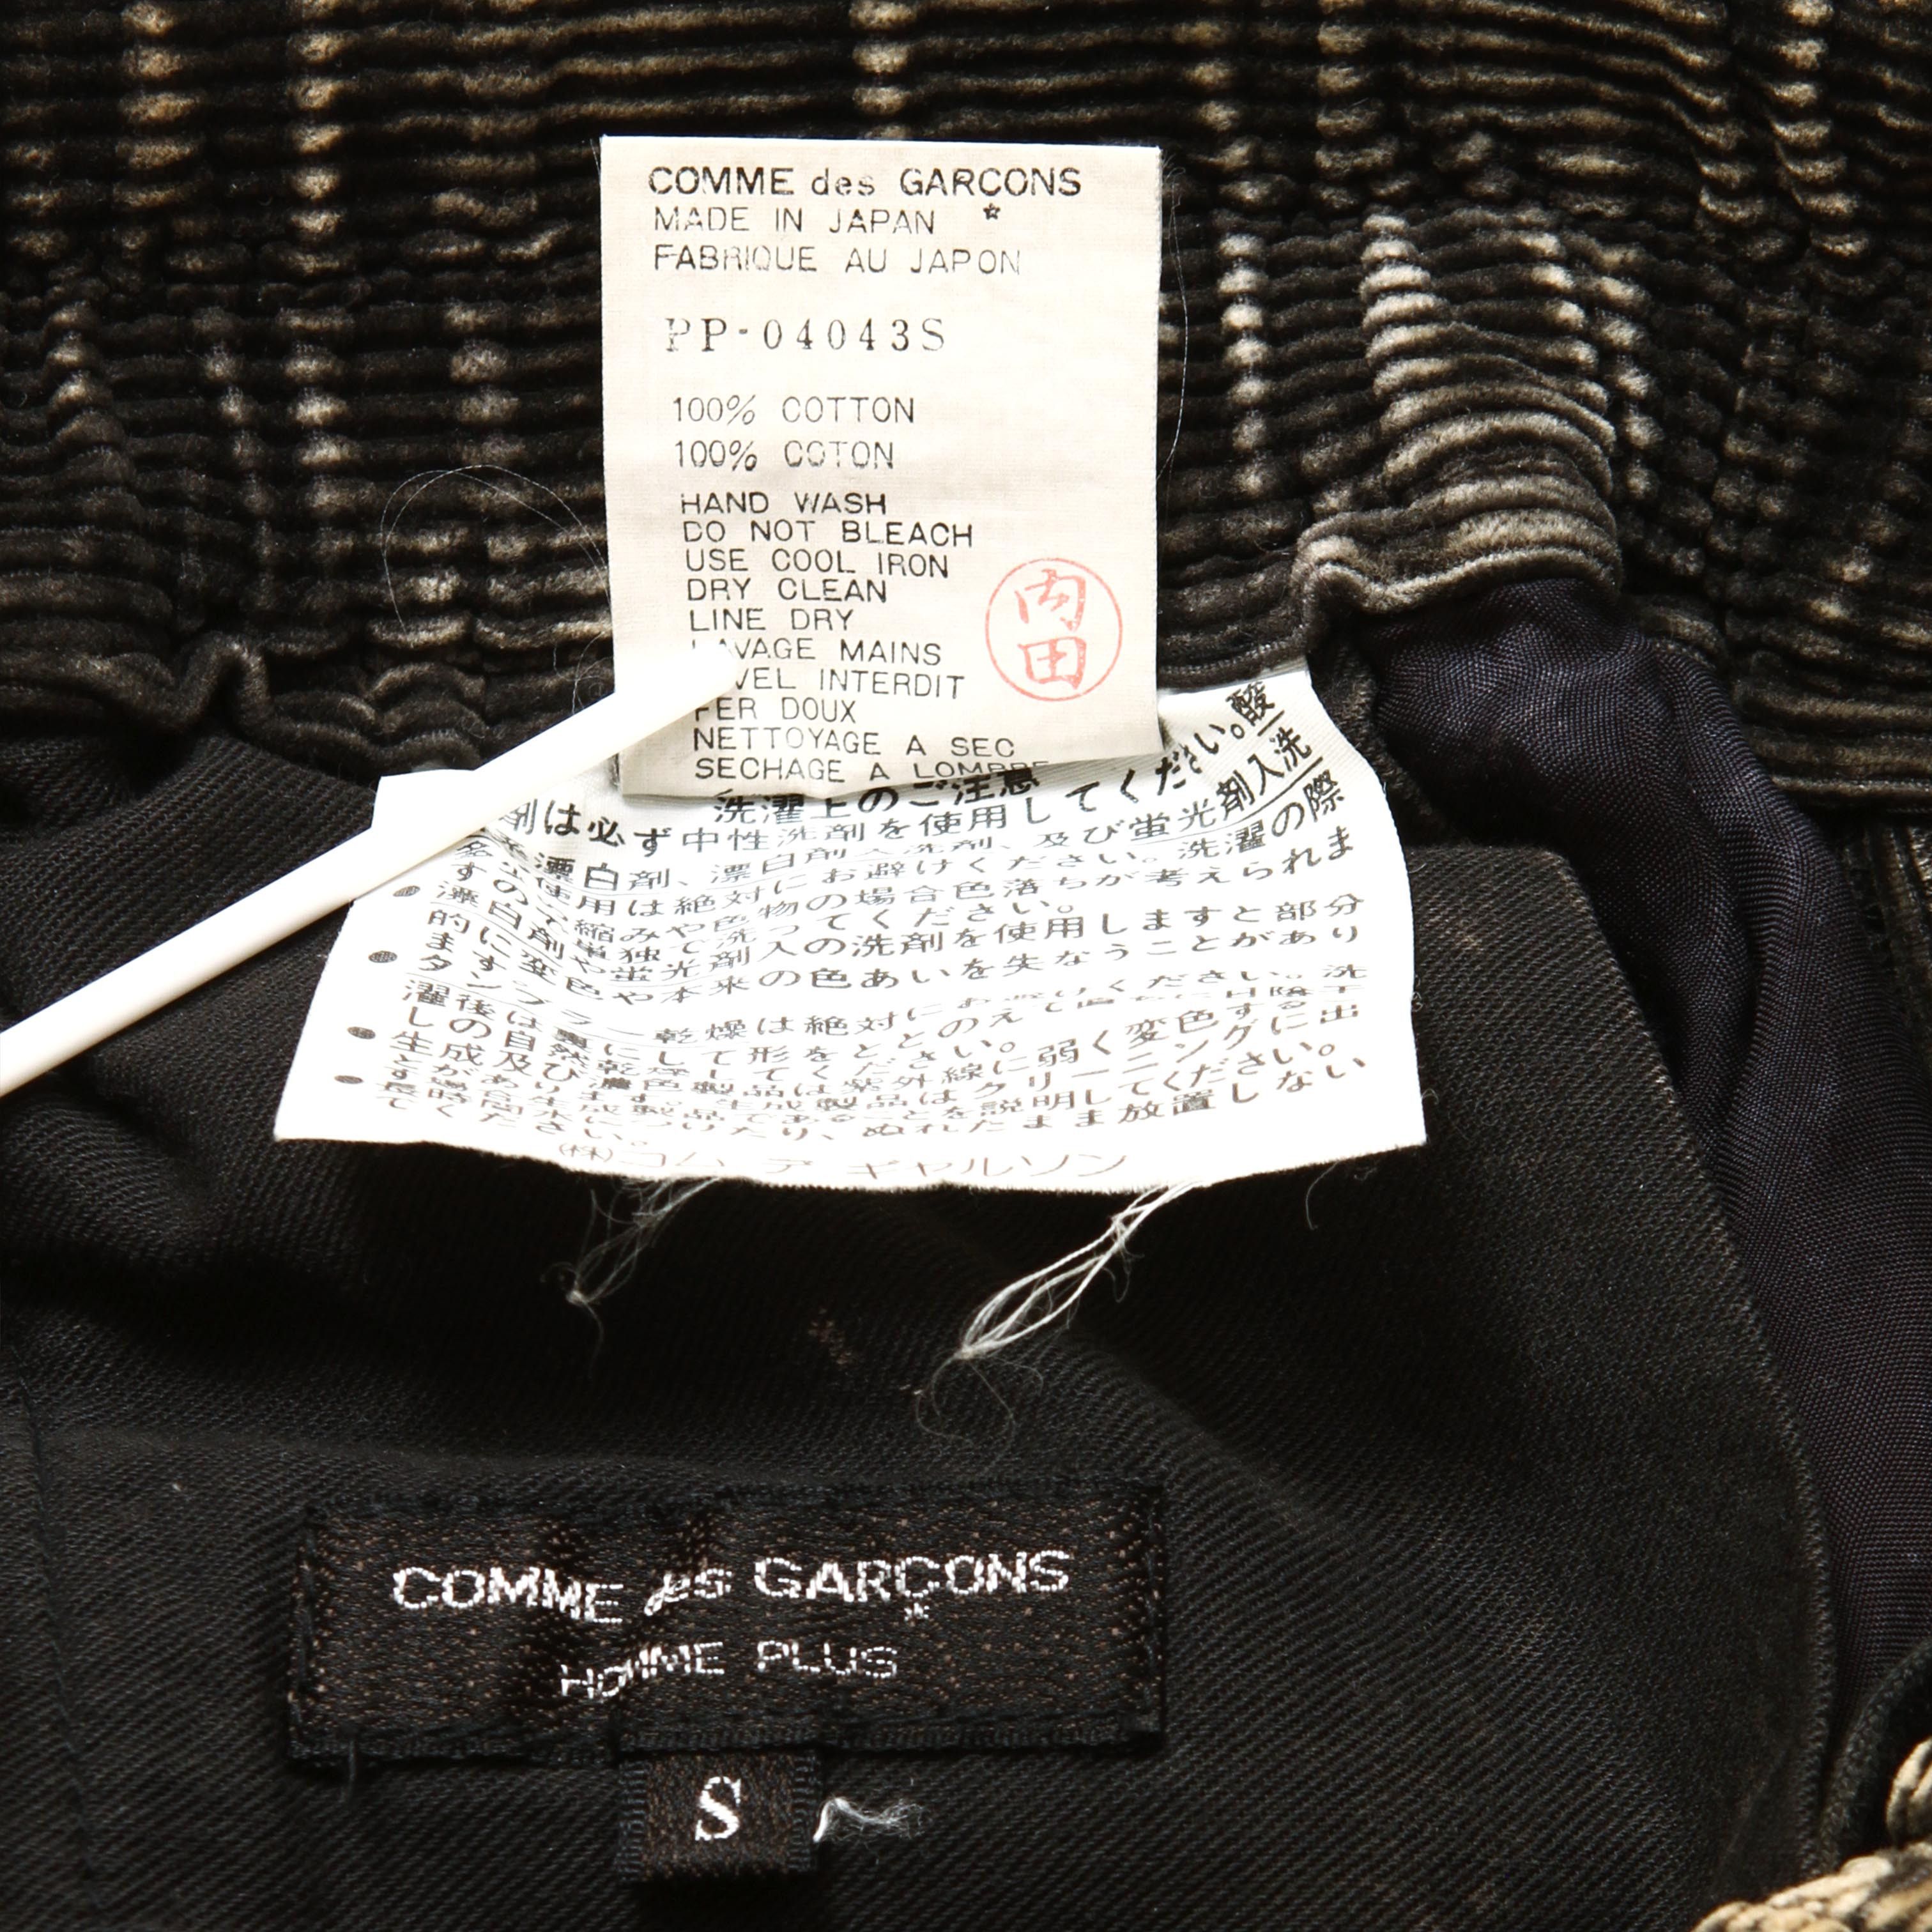 AW93 Cotton Corduroy Pants - 4